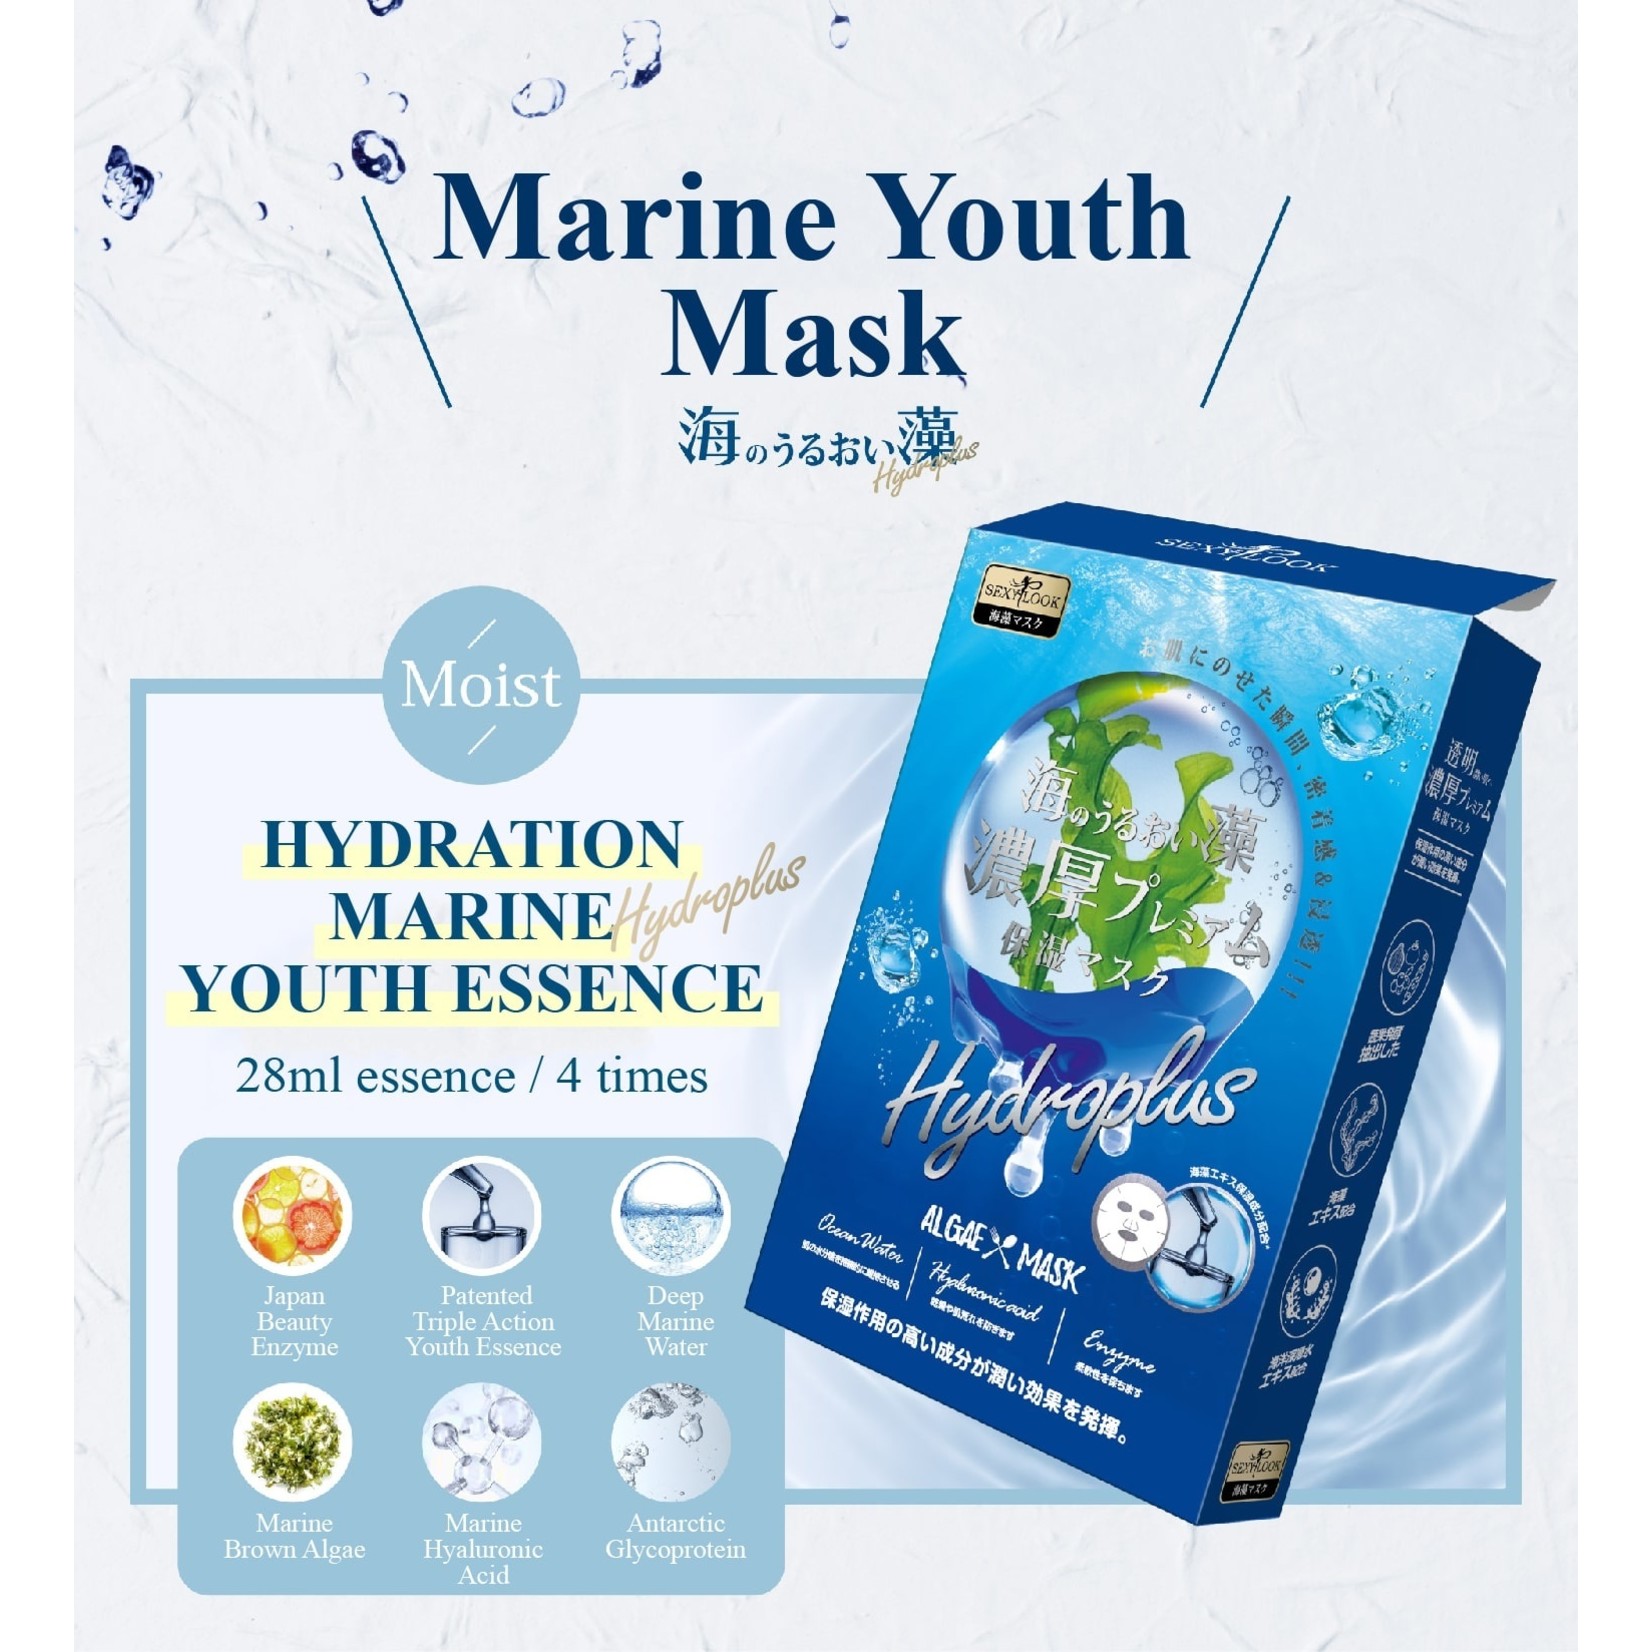 SEXYLOOK Algae Hydroplus Mask Trial Mix (5 pcs)